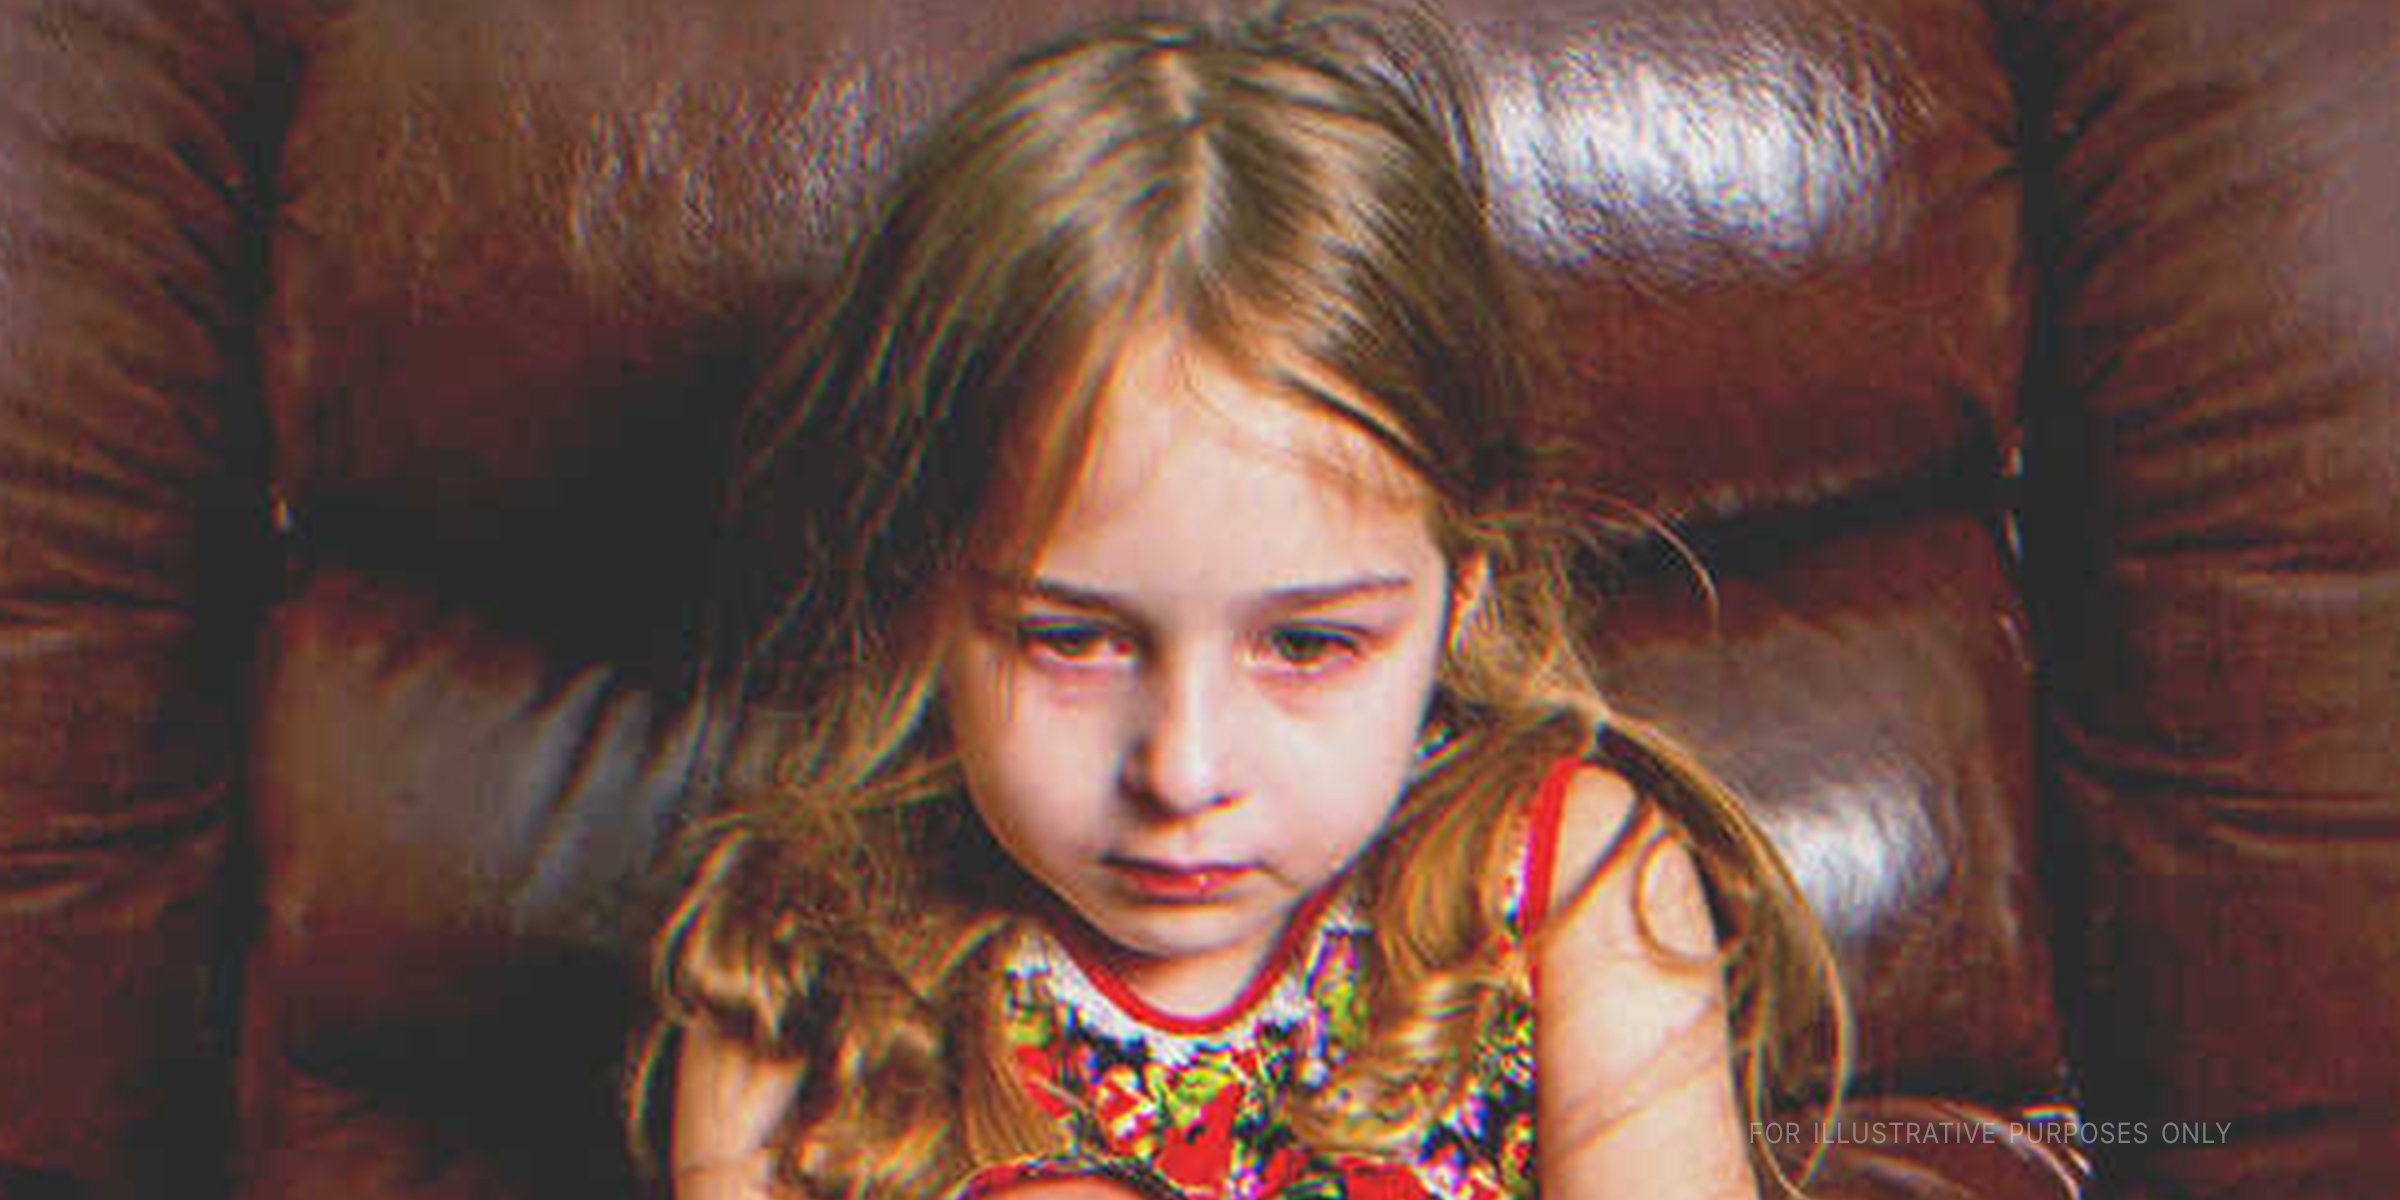 Tearful child. | Source: Shutterstock.com